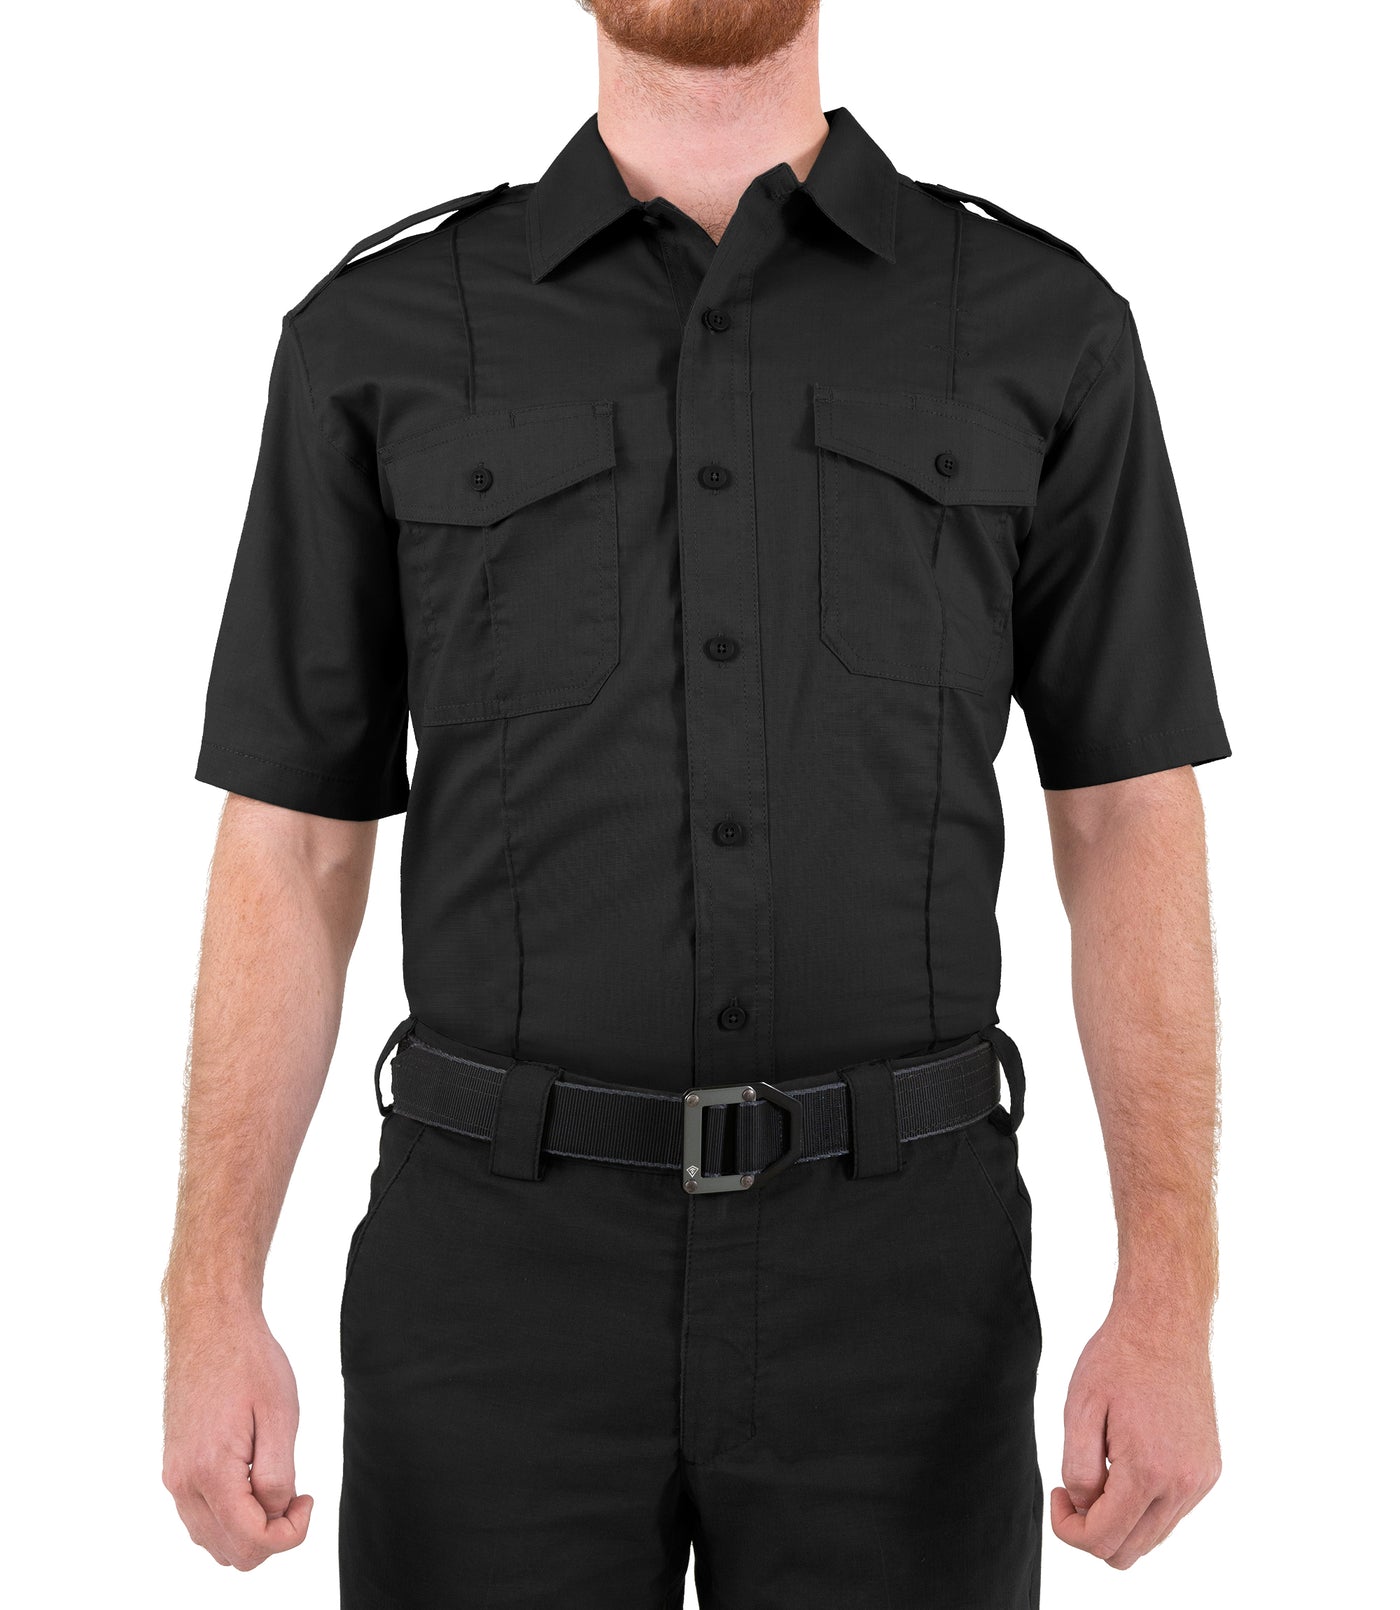 Front of Men's Pro Duty Uniform Short Sleeve Shirt in Black